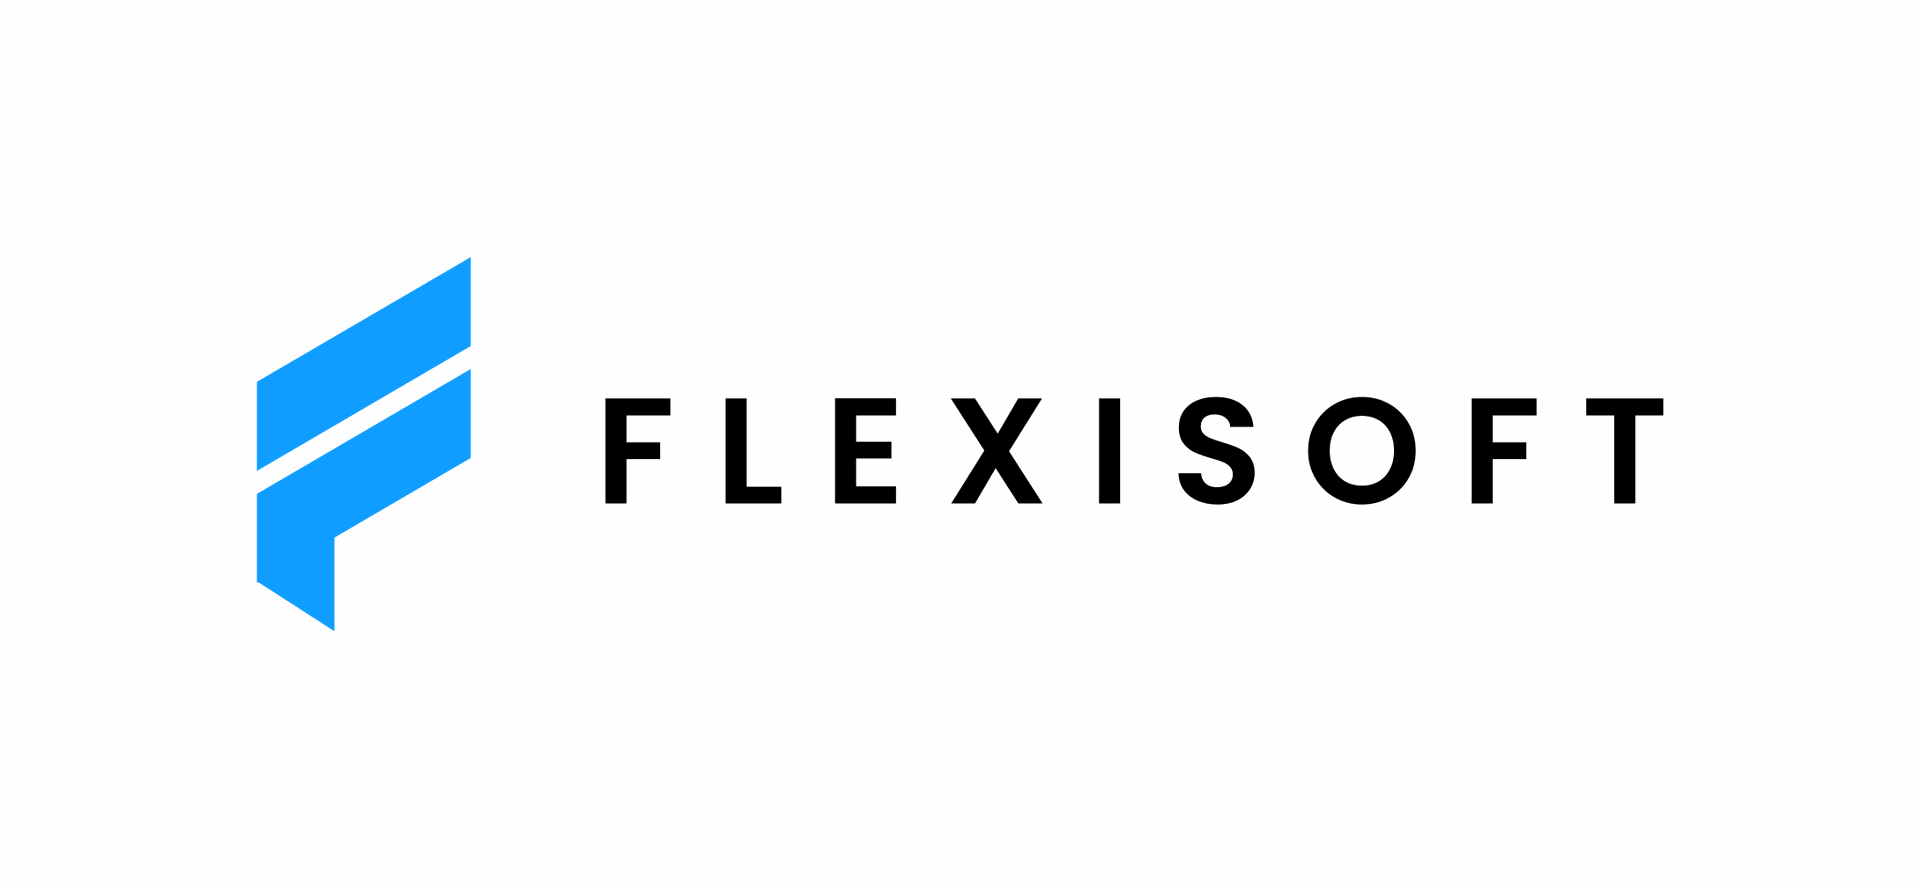 Flexisoft